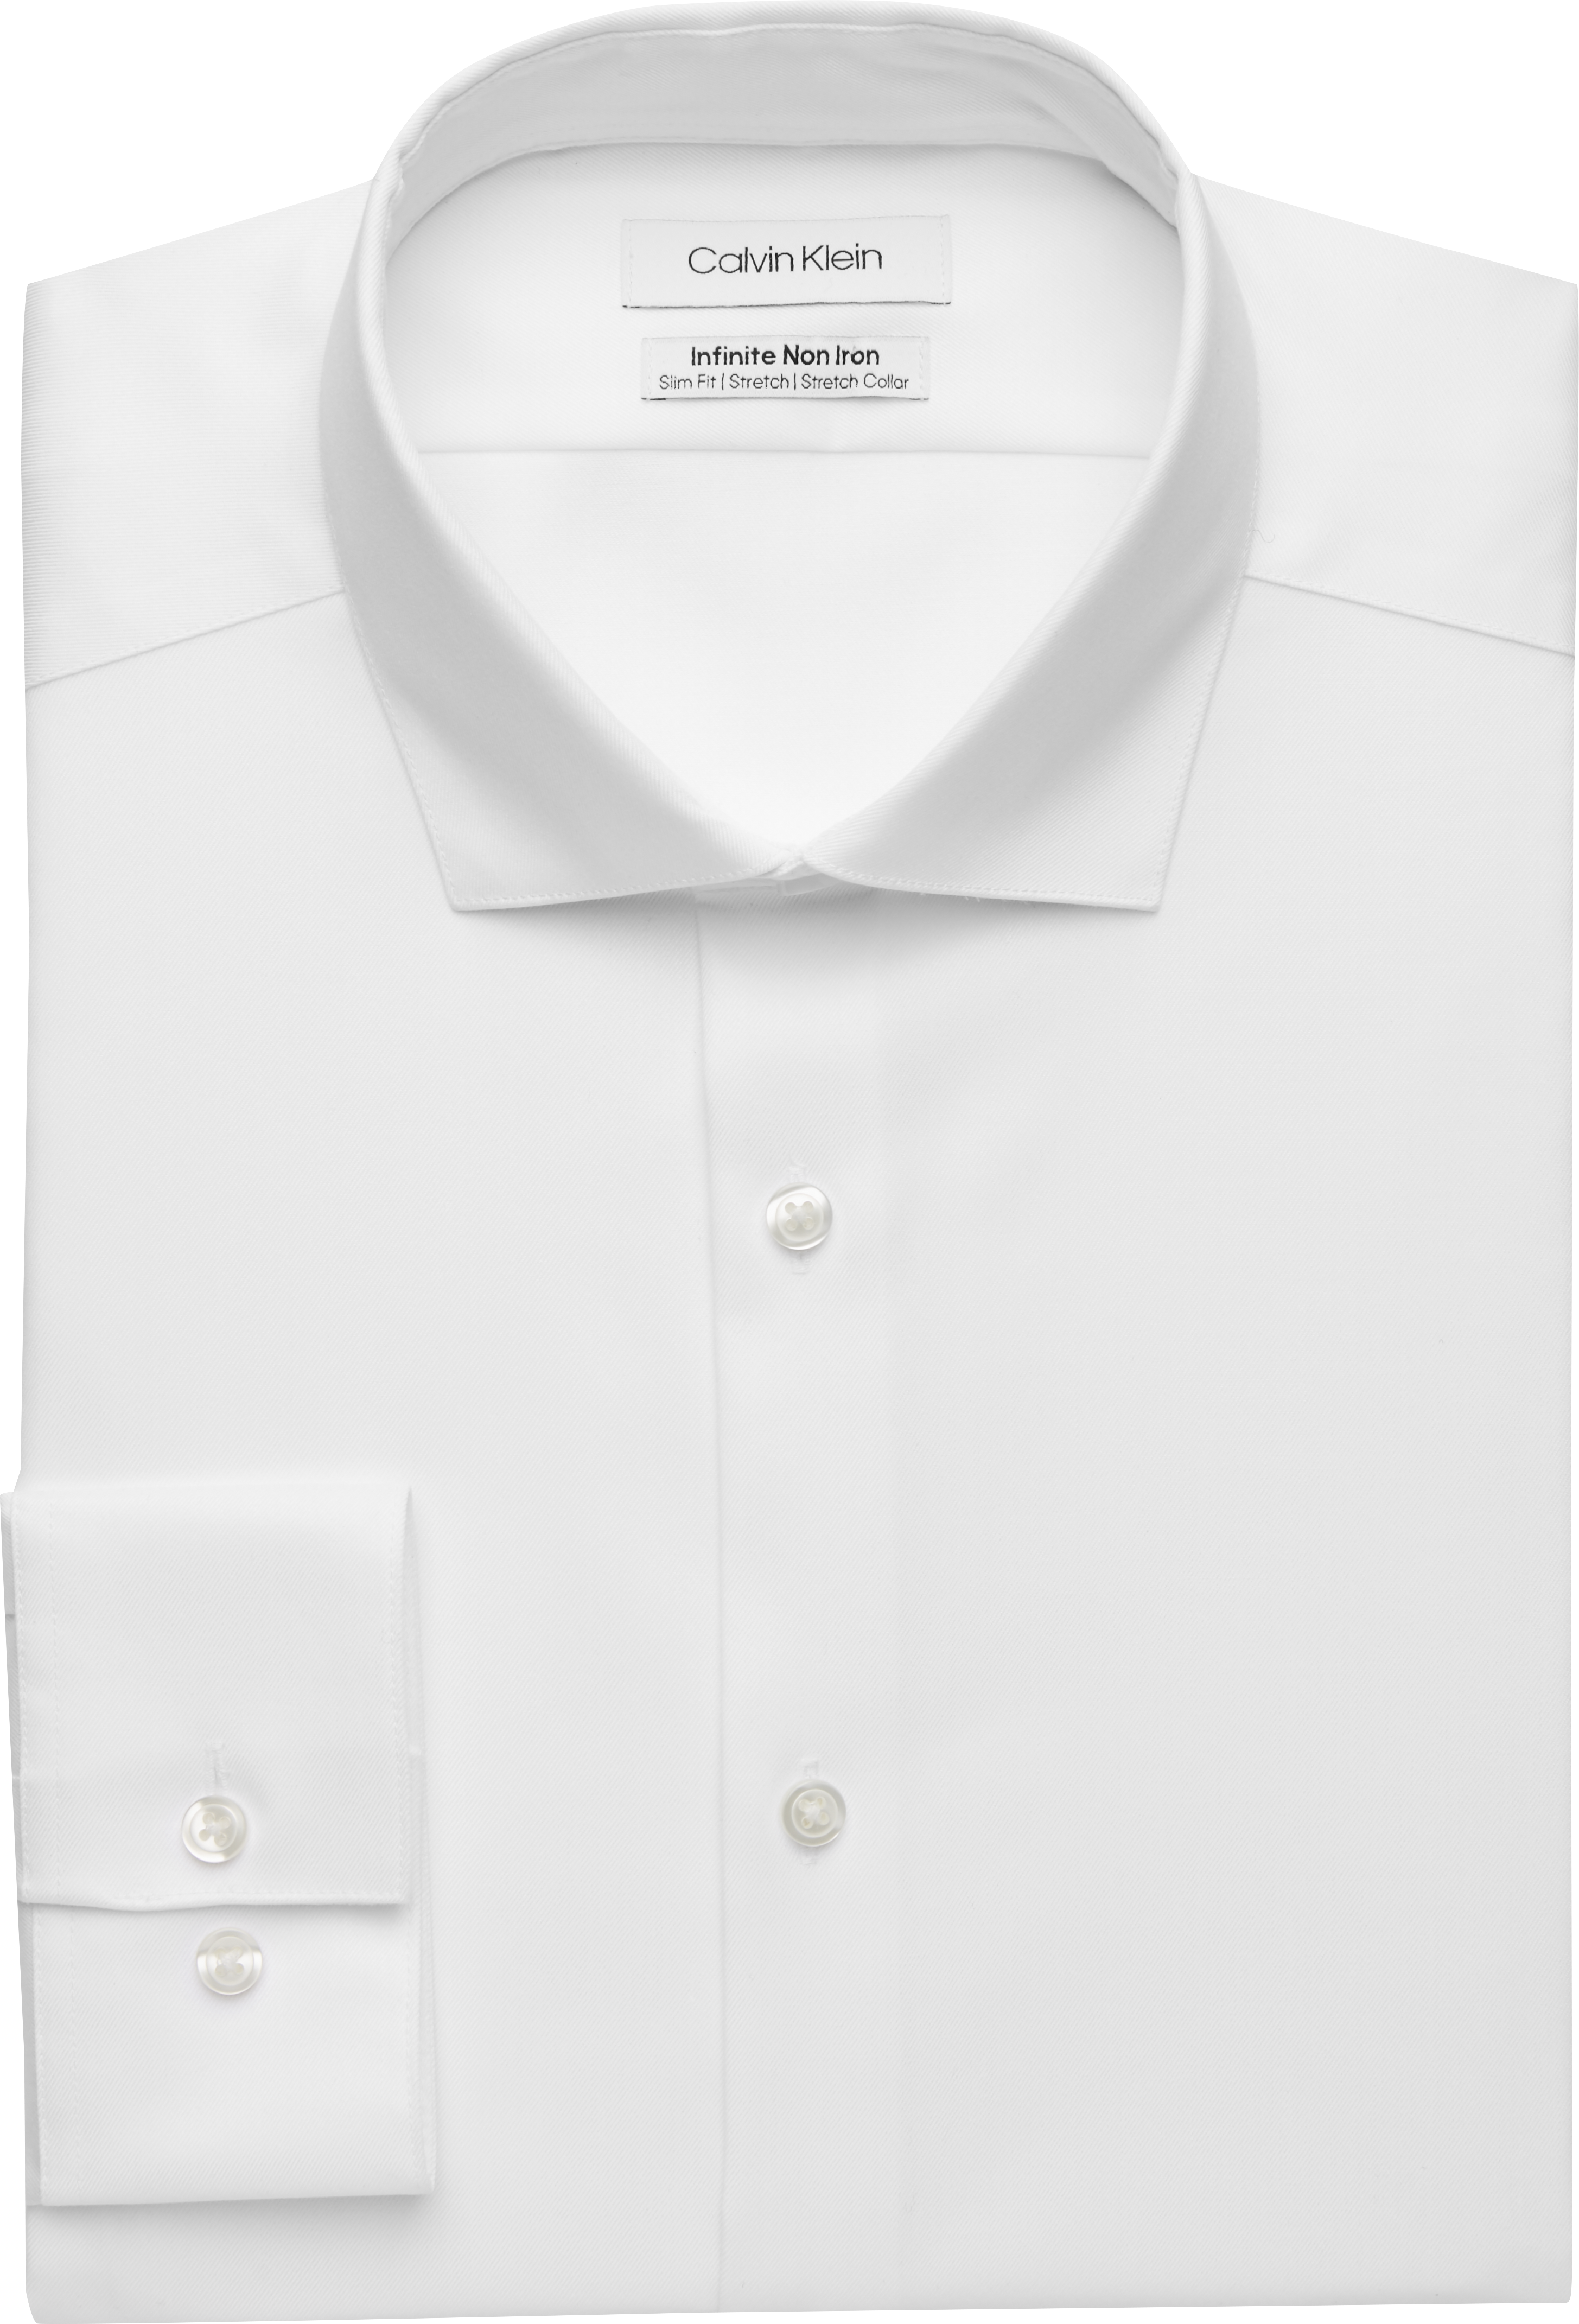 Daarbij Helaas Laan Calvin Klein Infinite Non-Iron Slim Fit Stretch Collar Dress Shirt, White -  Men's Suits | Men's